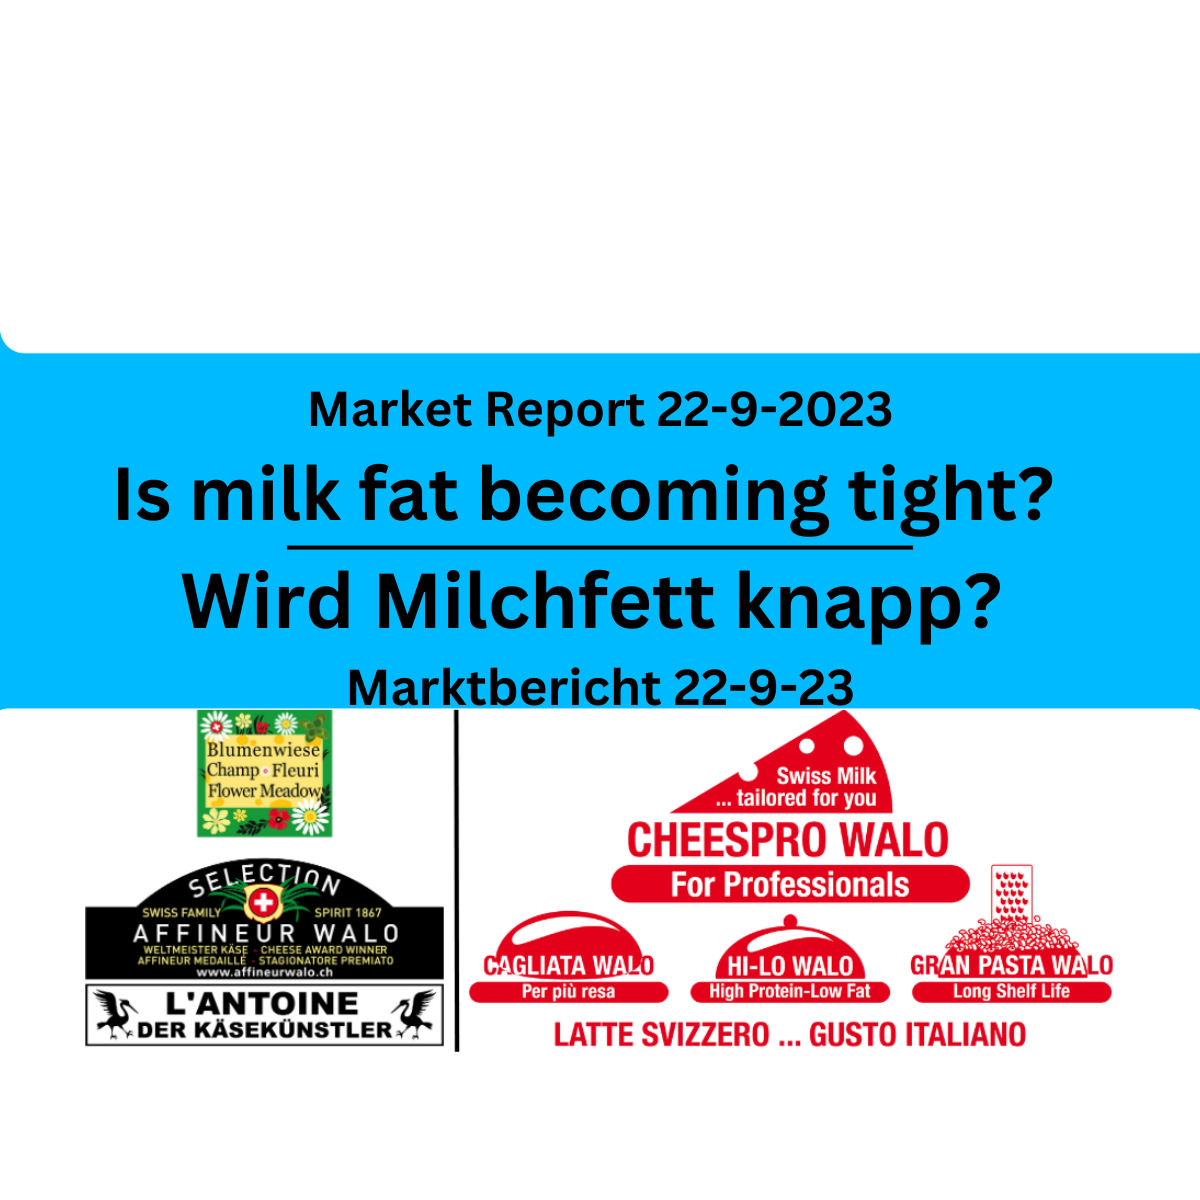 Market Report-22-9-23, Marktbericht 22-9-23